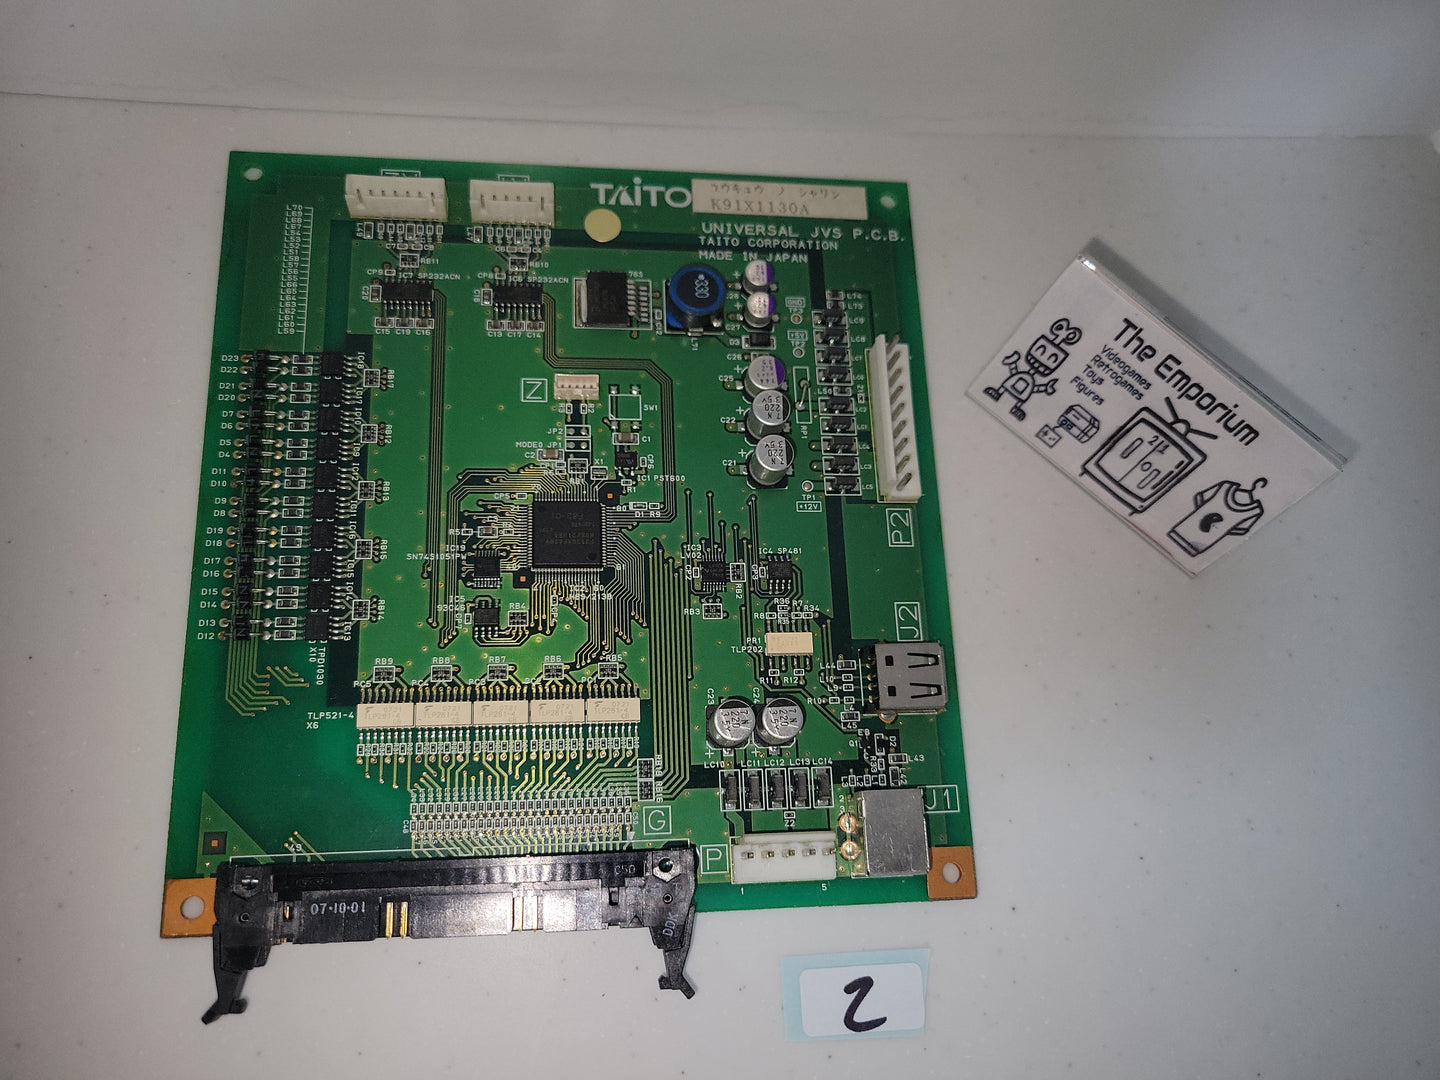 Taito k91x1130A JVS Board - Arcade Pcb Printed Circuit Board